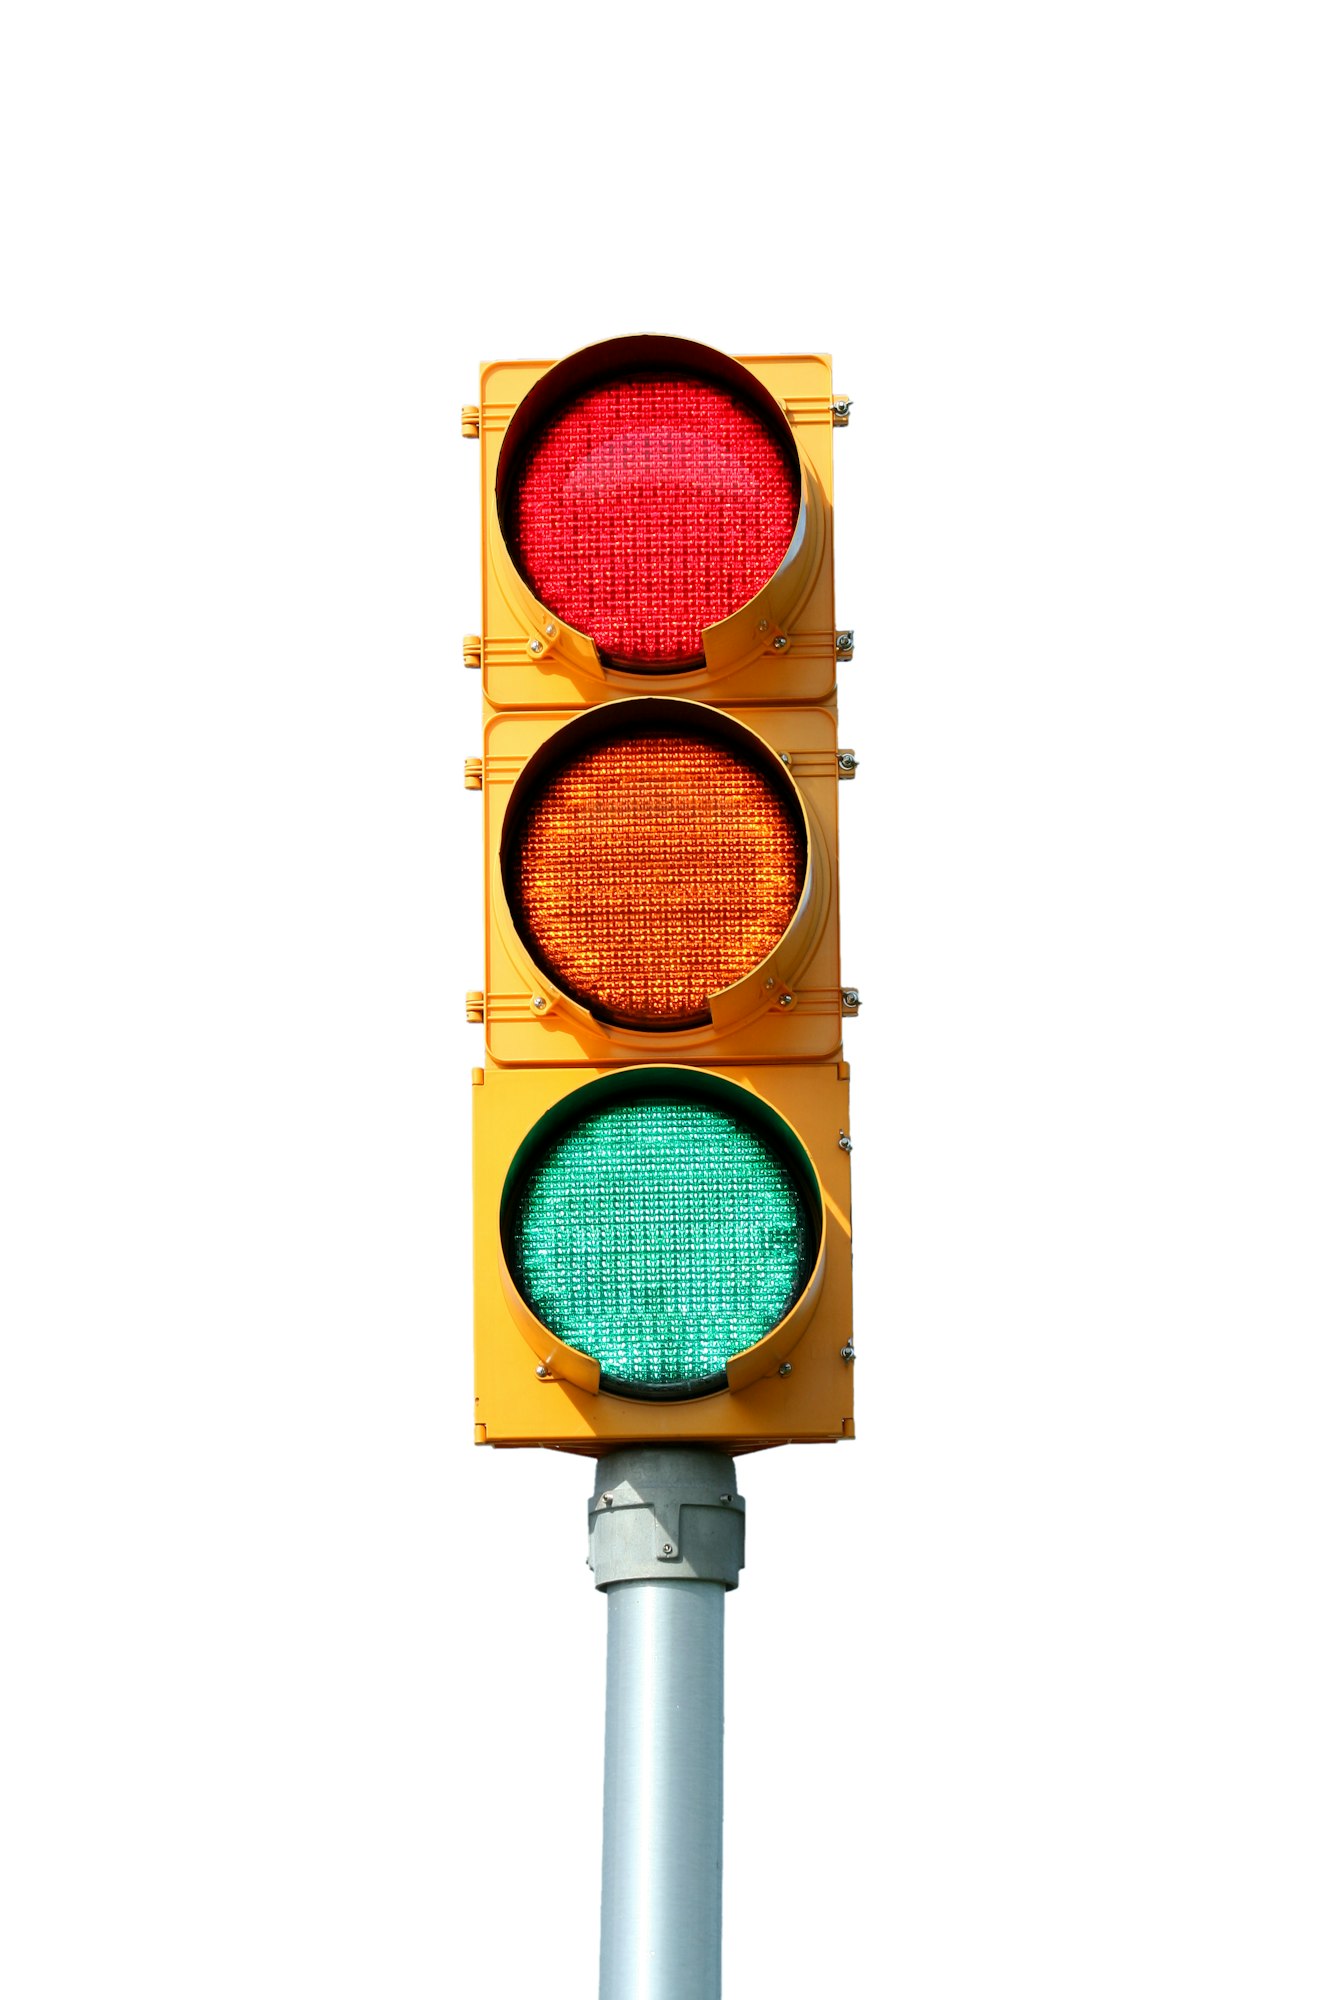 Isolated Traffic signal light